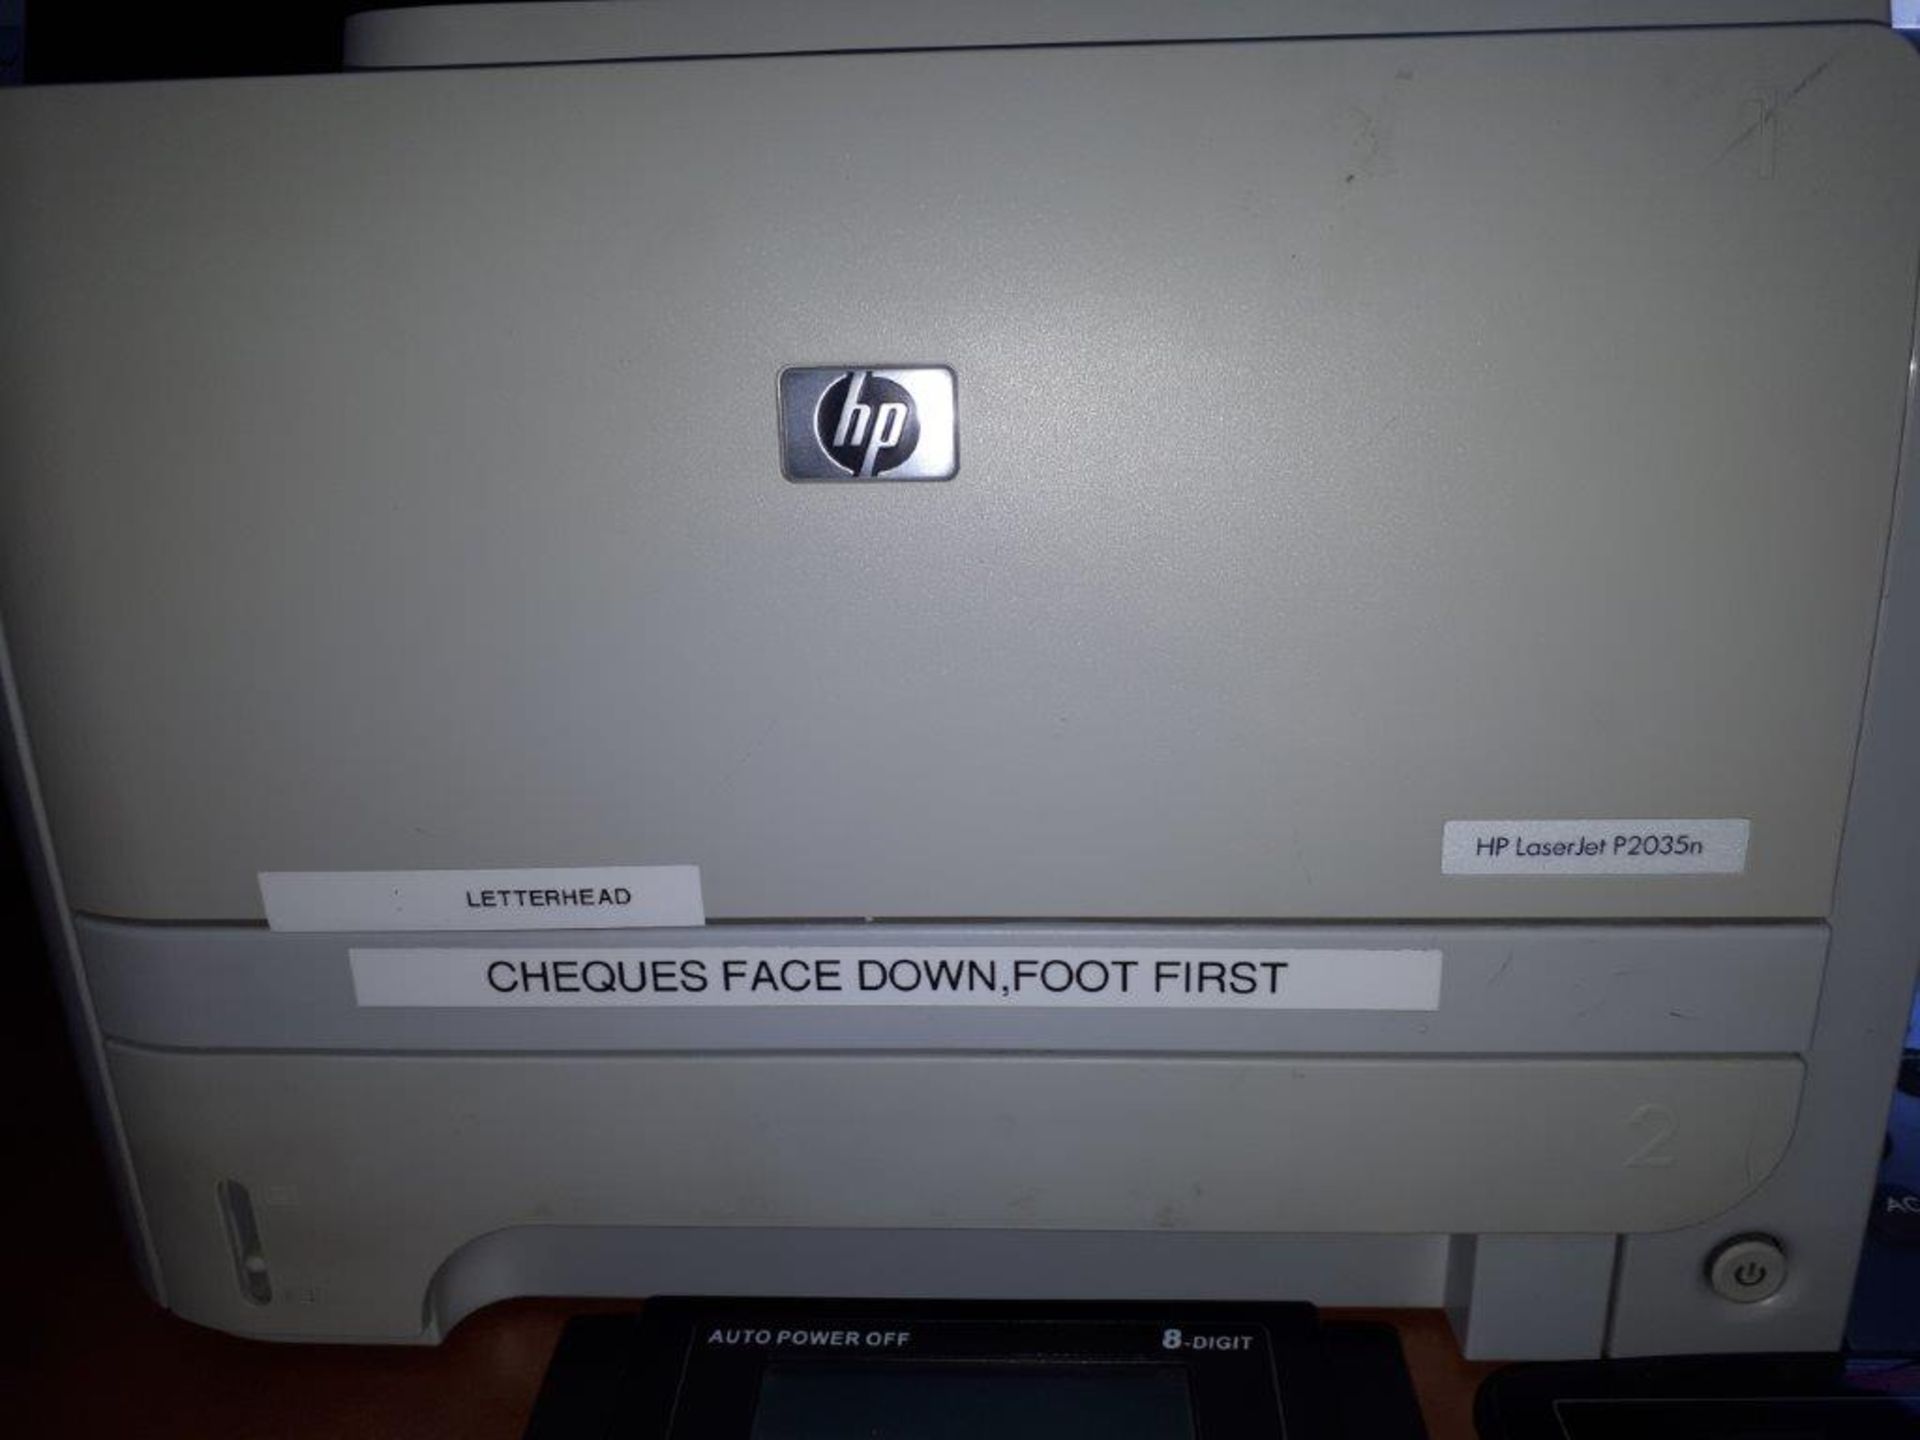 Imprimante HP LaserJet P2035n - Image 2 of 2